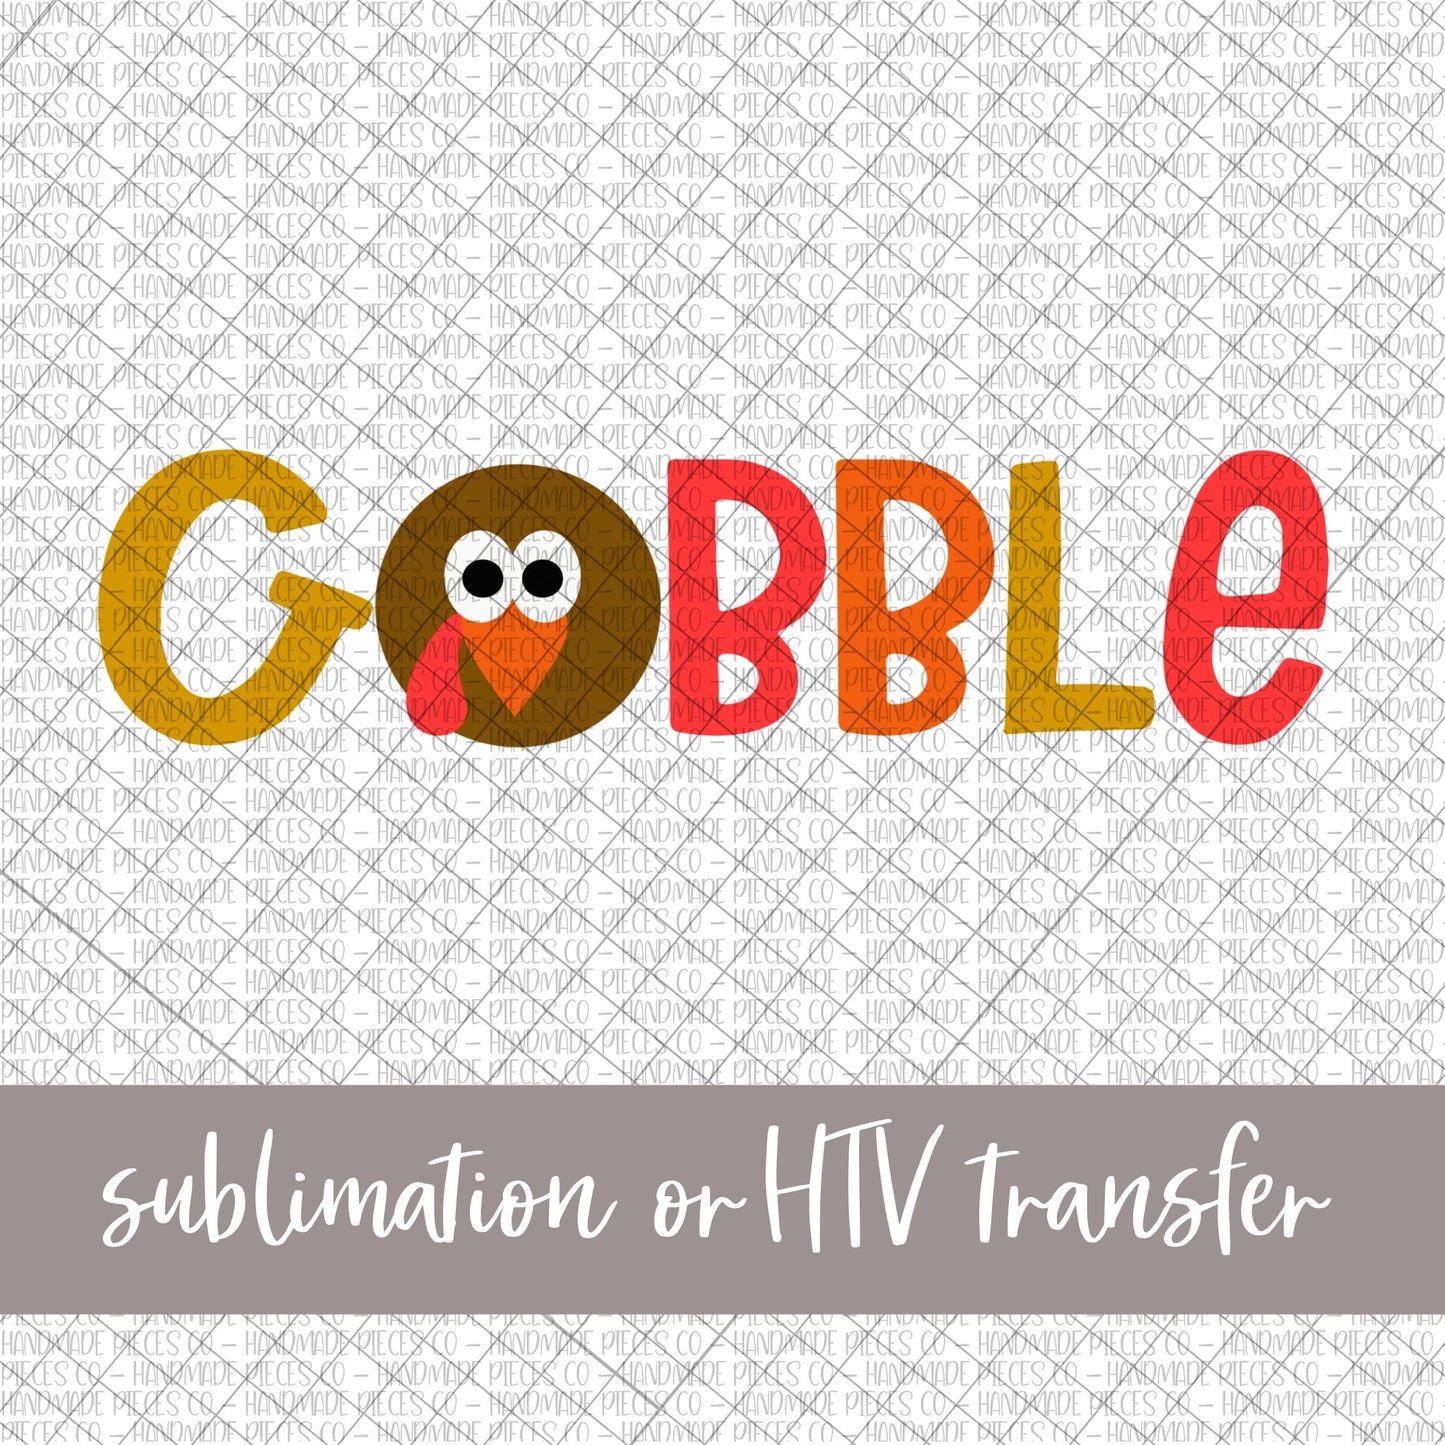 Gobble, Boy - Sublimation or HTV Transfer